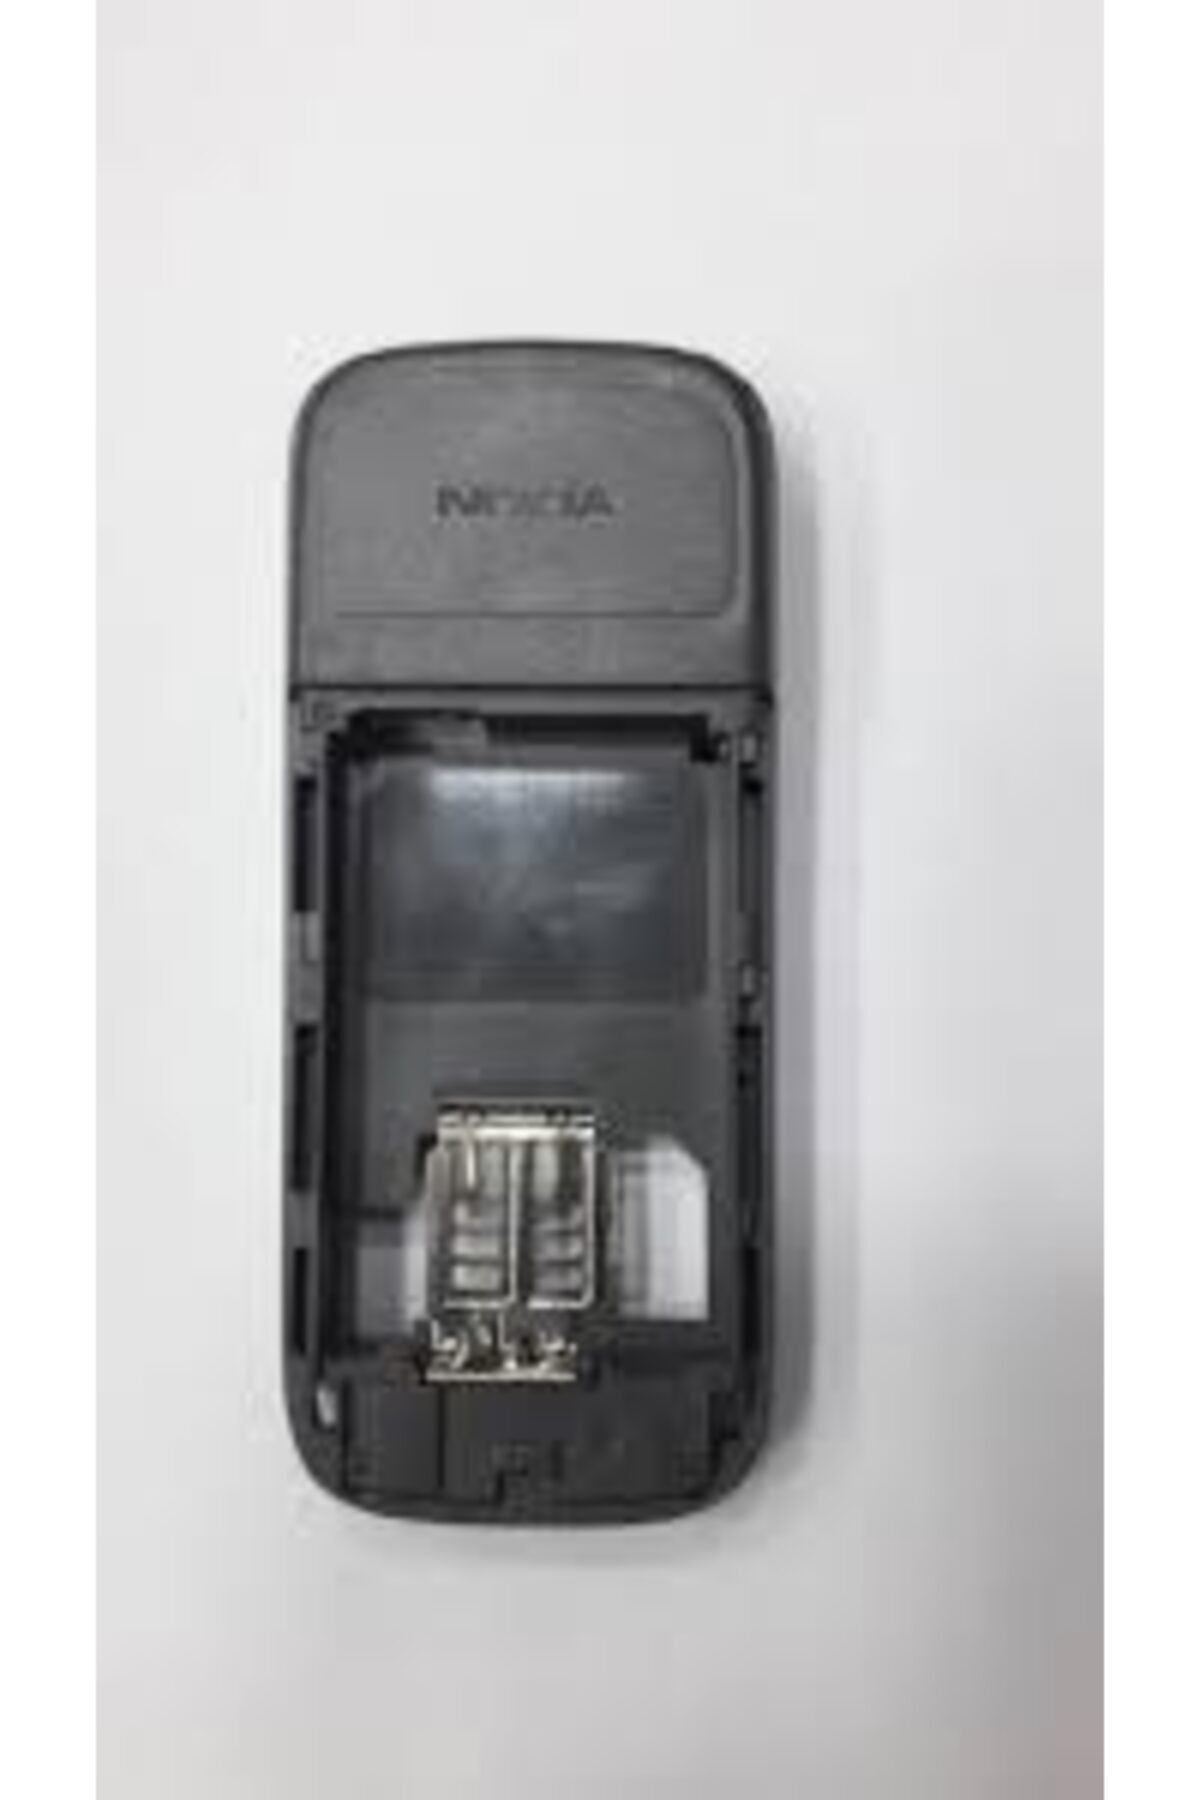 Nokia 1200-1208 Kasa